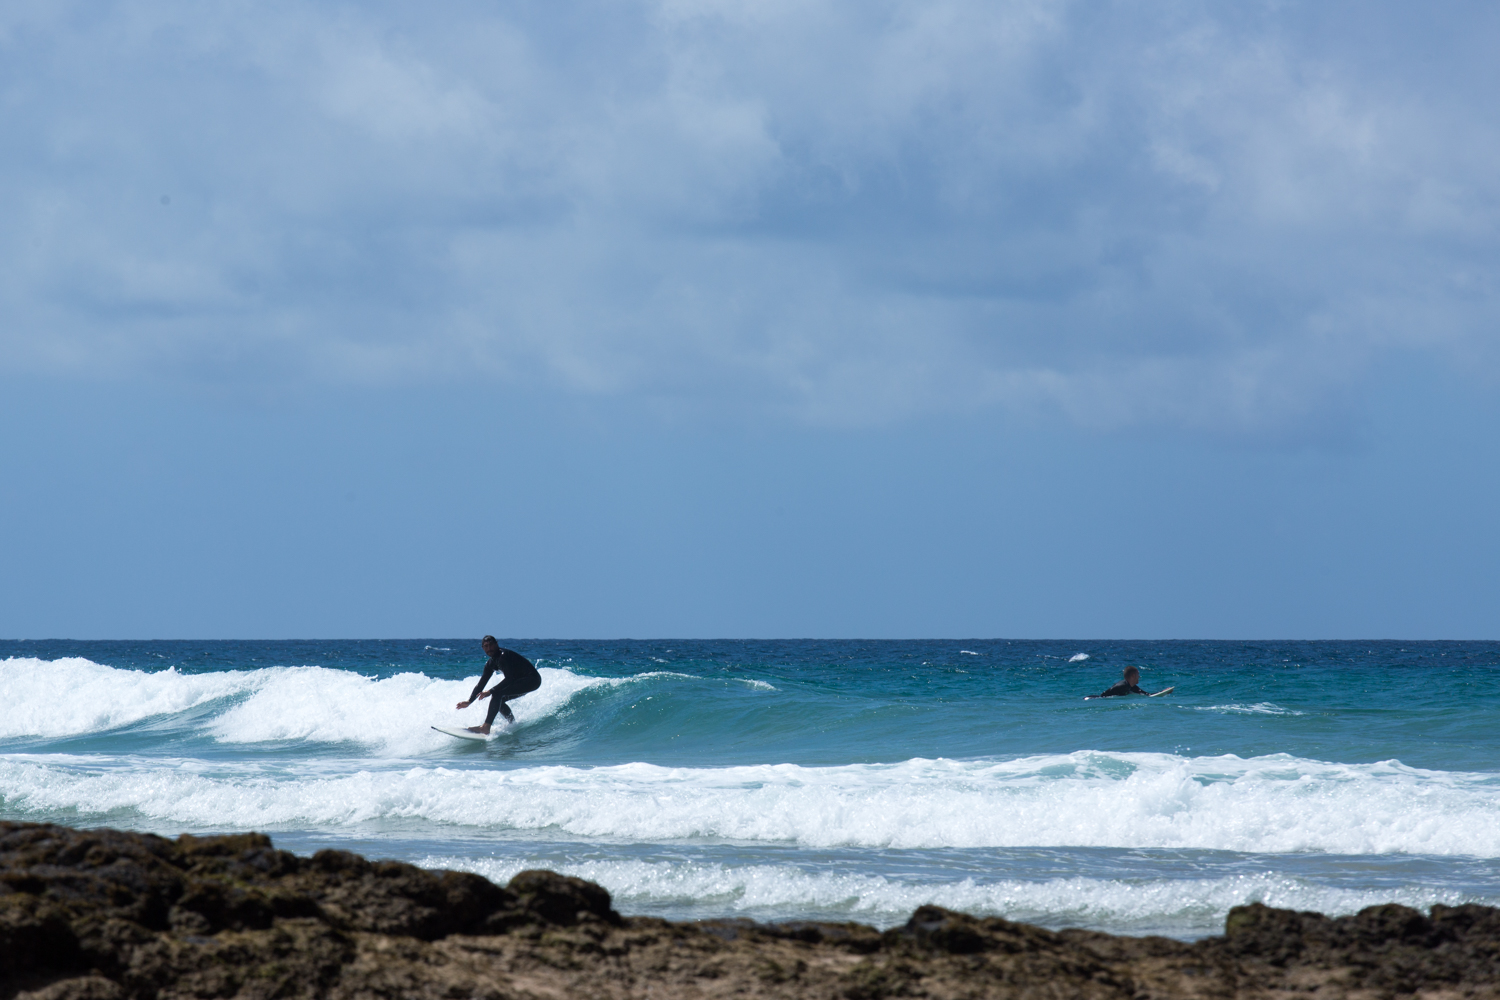 Surfer riding a wave at El Cotillo, Fuerteventura